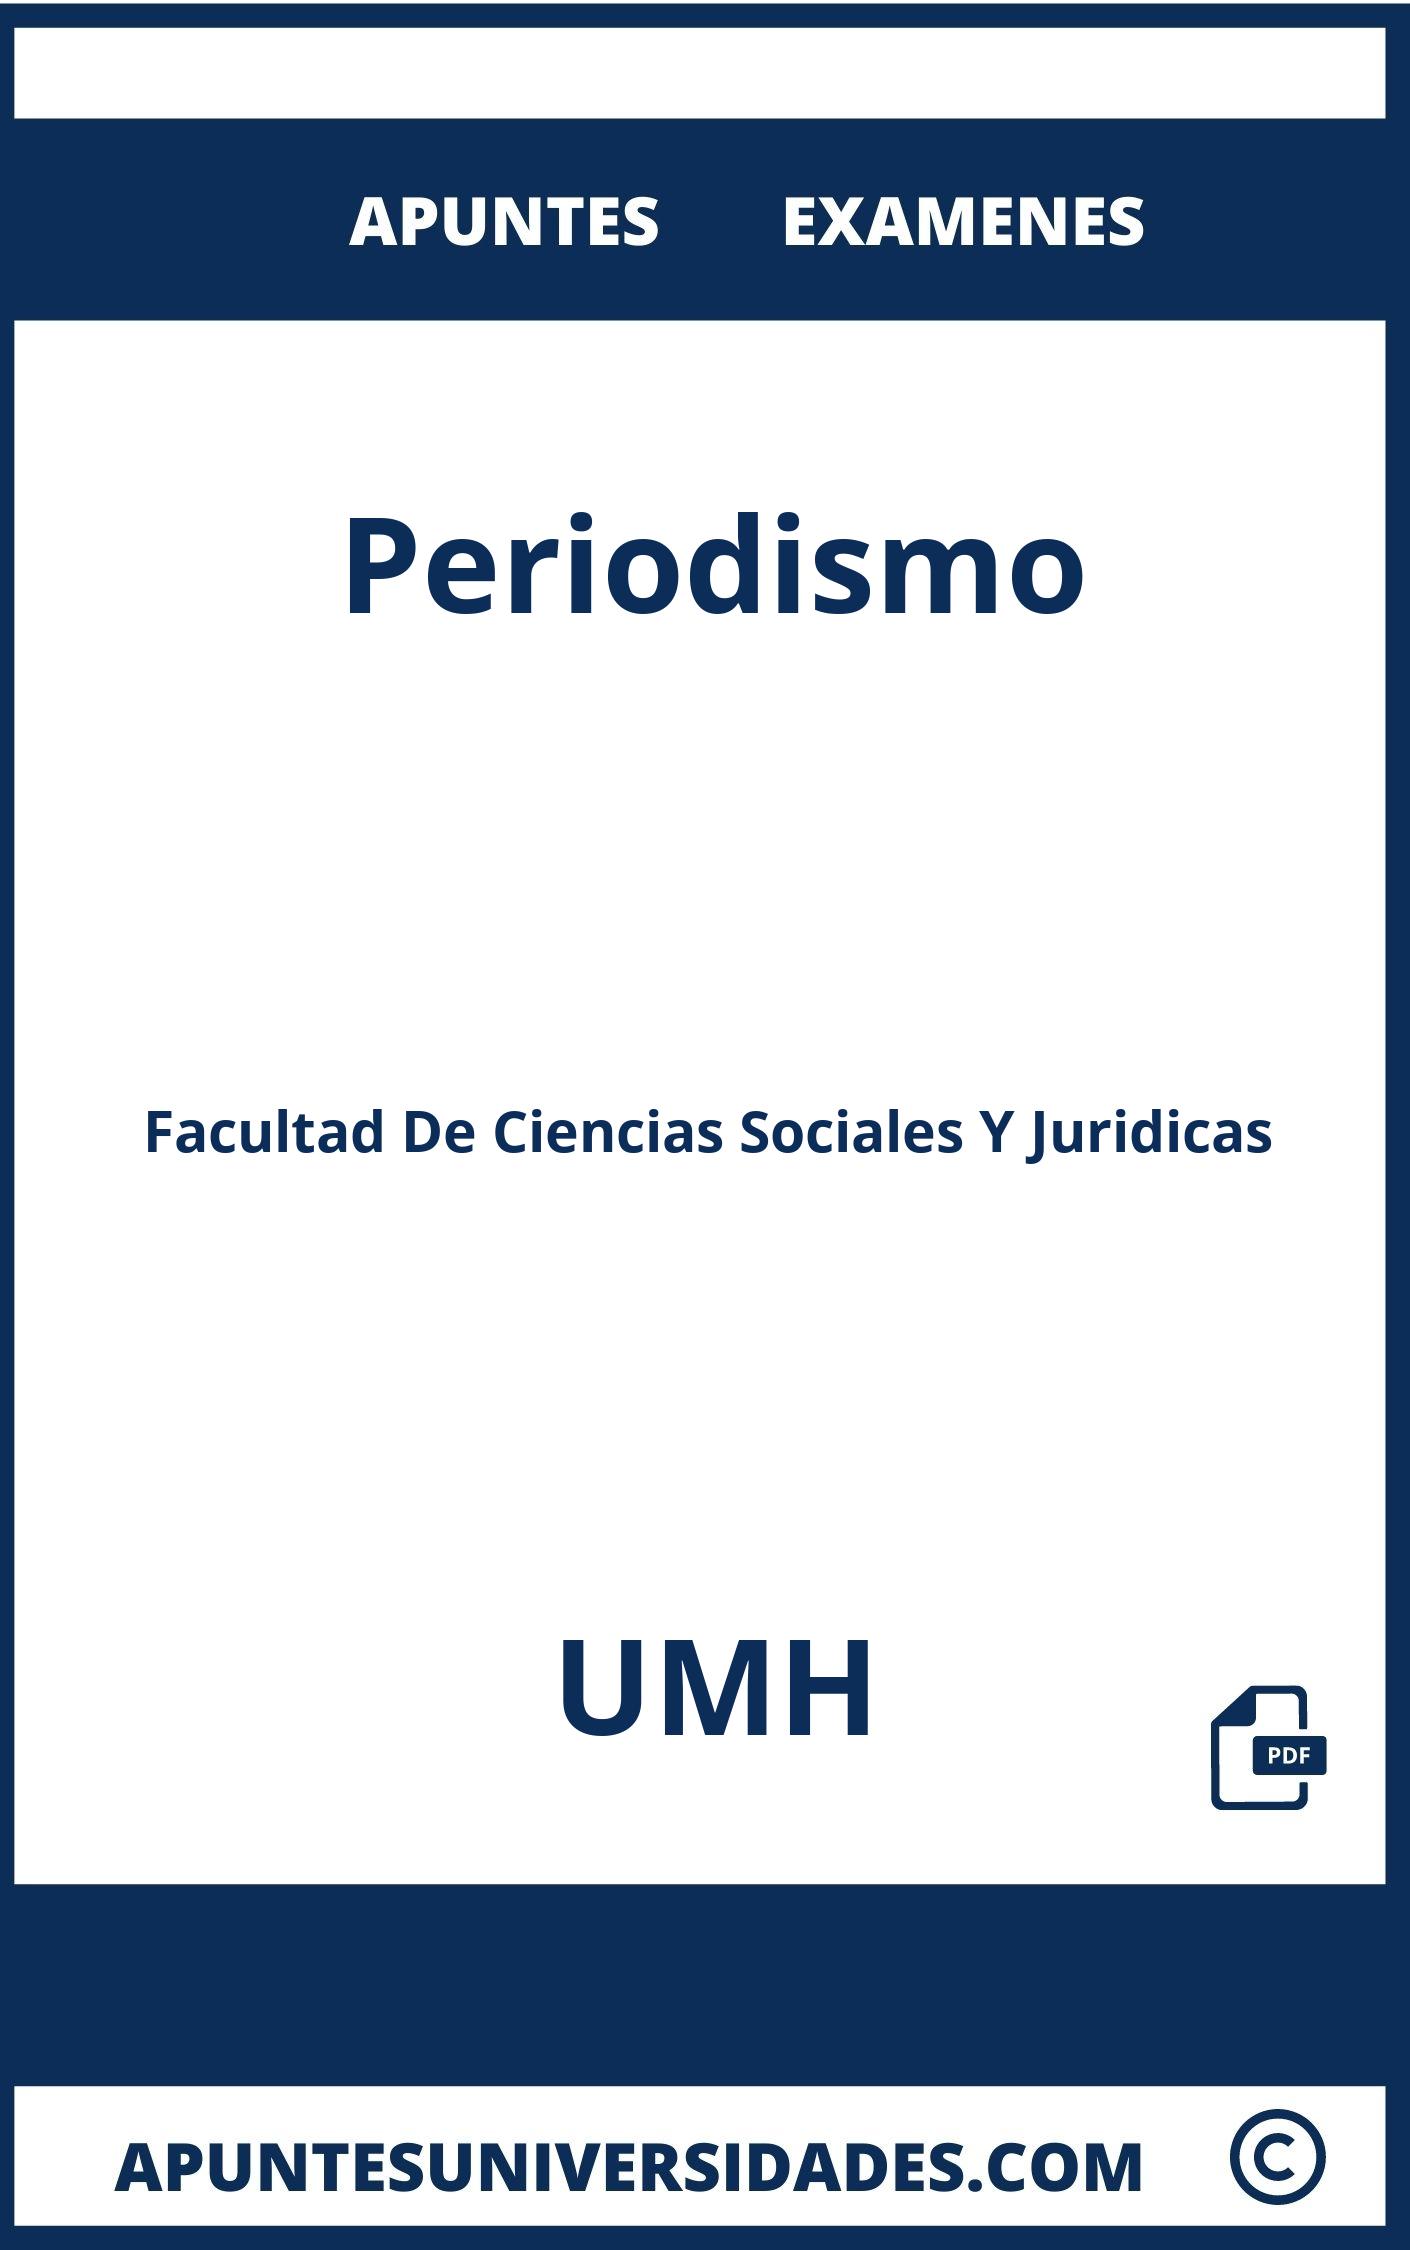 Examenes y Apuntes Periodismo UMH